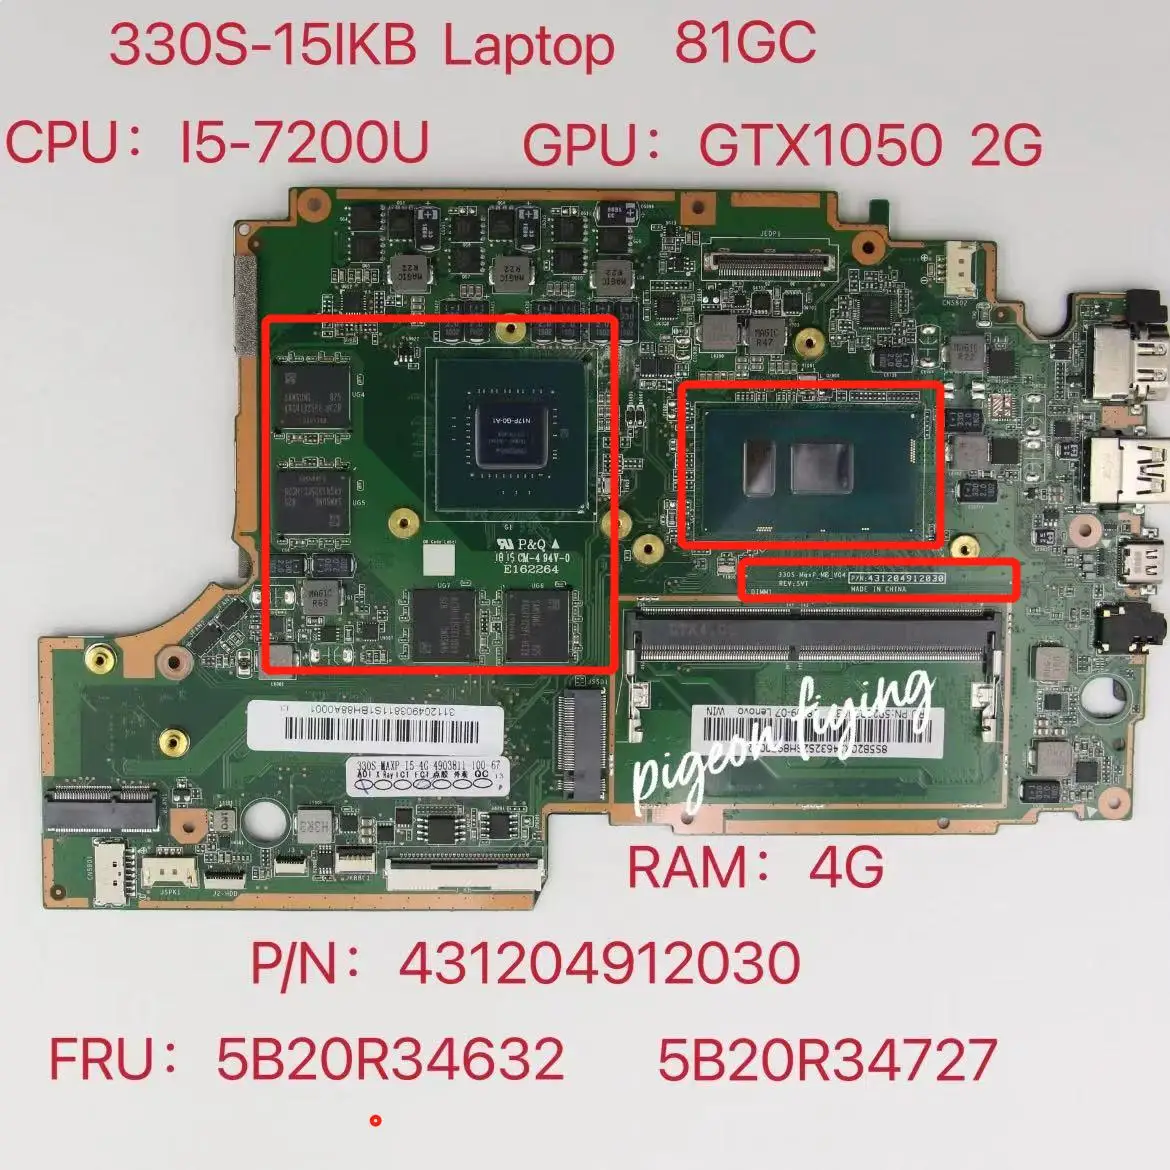 

for Lenovo Ideapad 330S-15IKB Mainboard Motherboard MB 81GC CPU:I5-7200U GPU:GTX1050 2G RAM:4G FRU:5B20R34727 5B20R34632